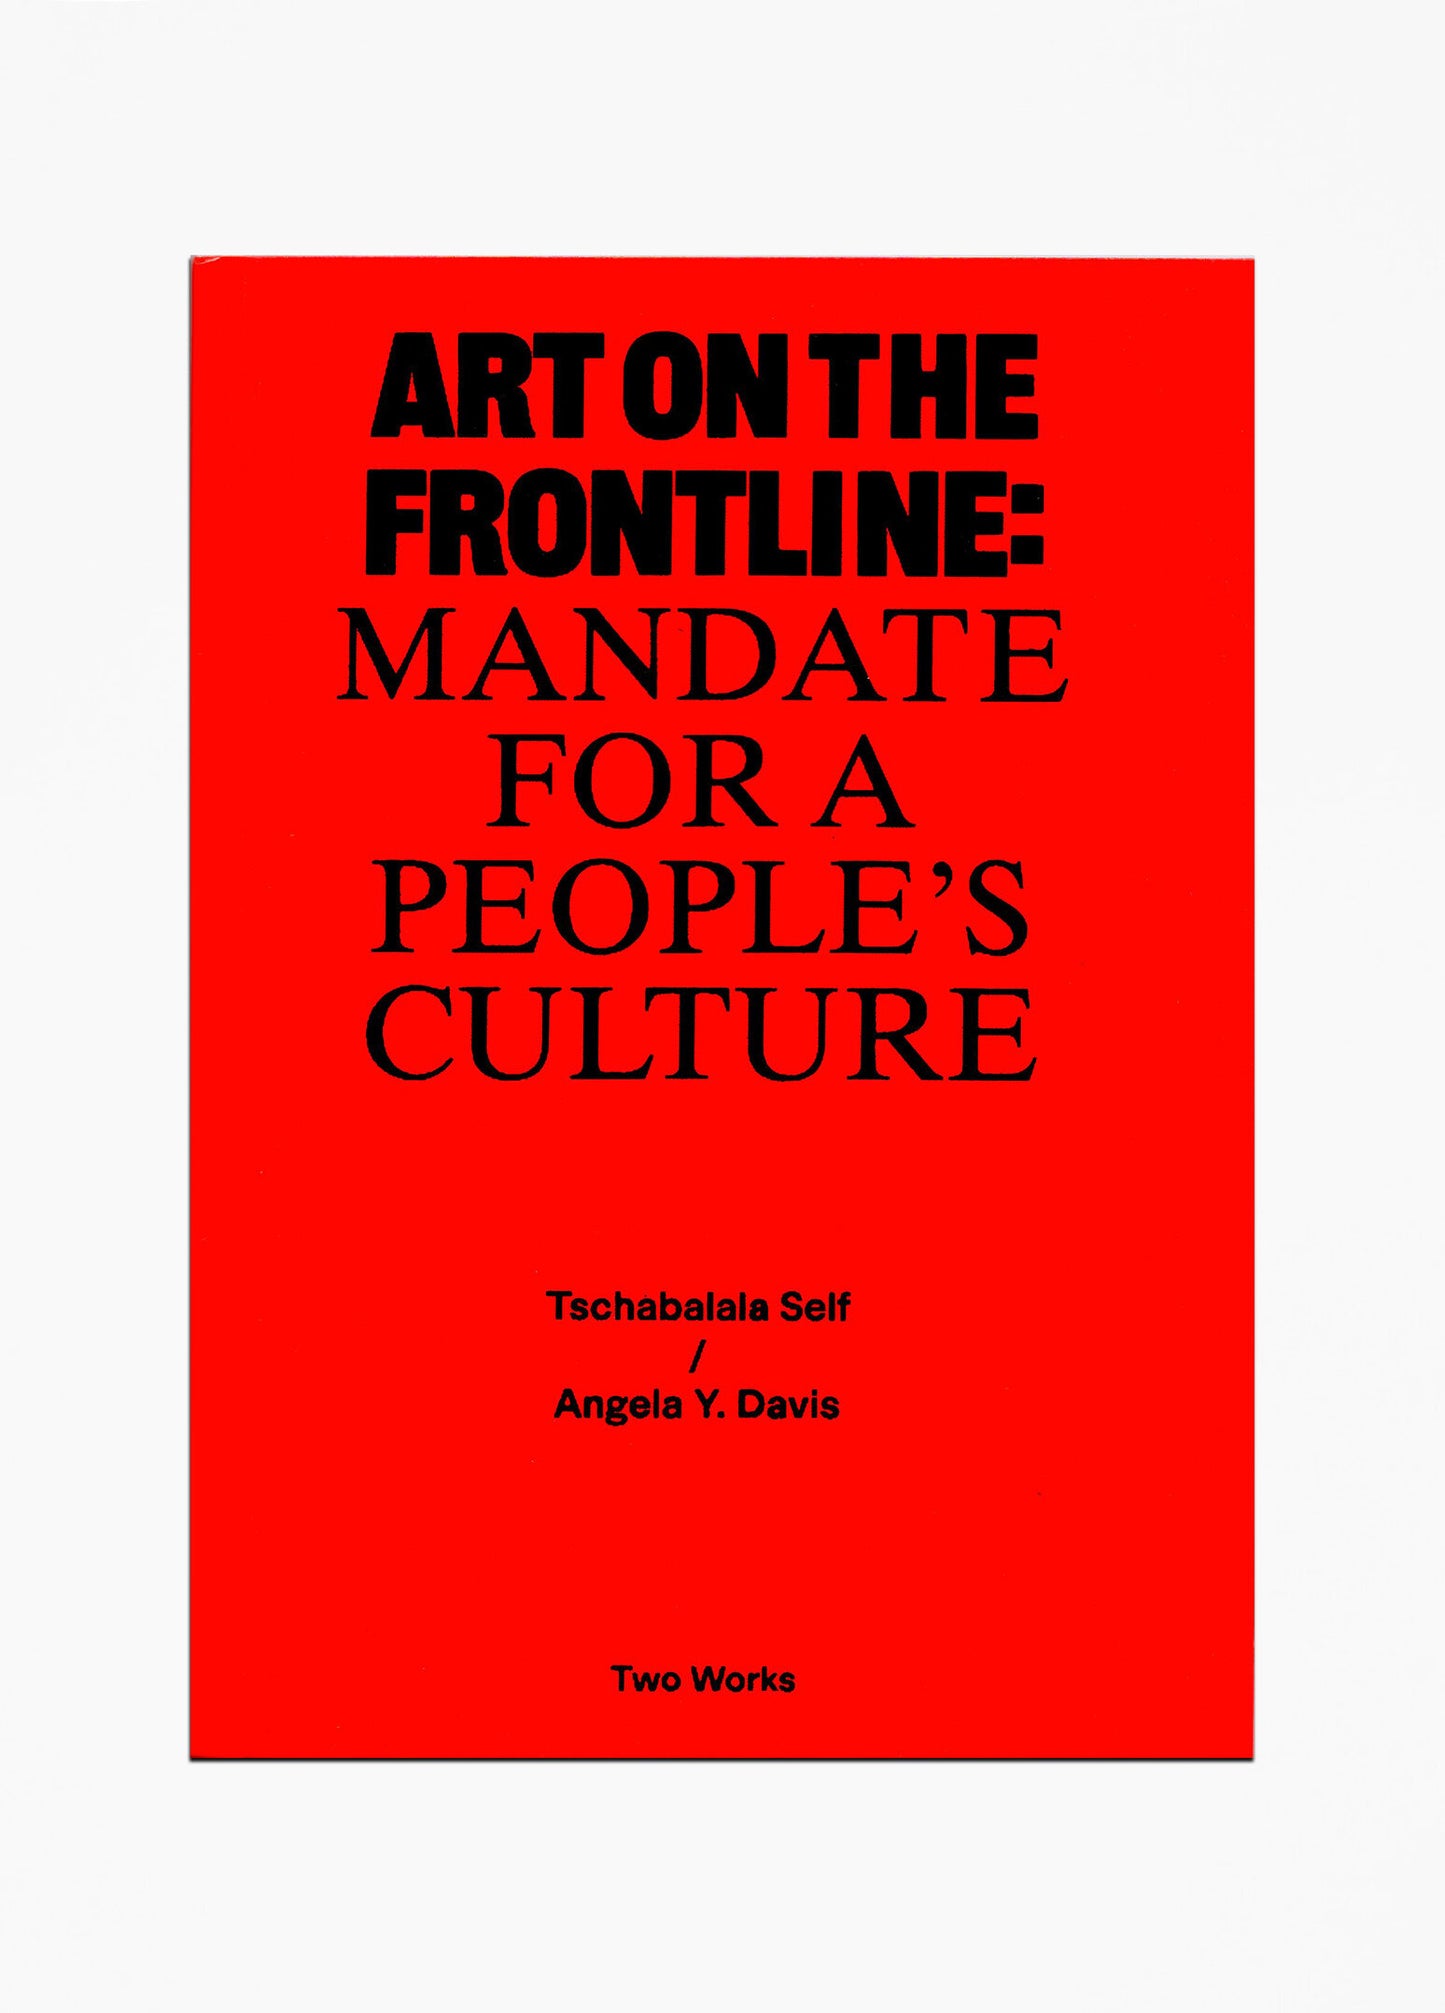 Angela Y. Davis & Tschabalala Self: Art on the Frontline: Mandate for a People's Culture